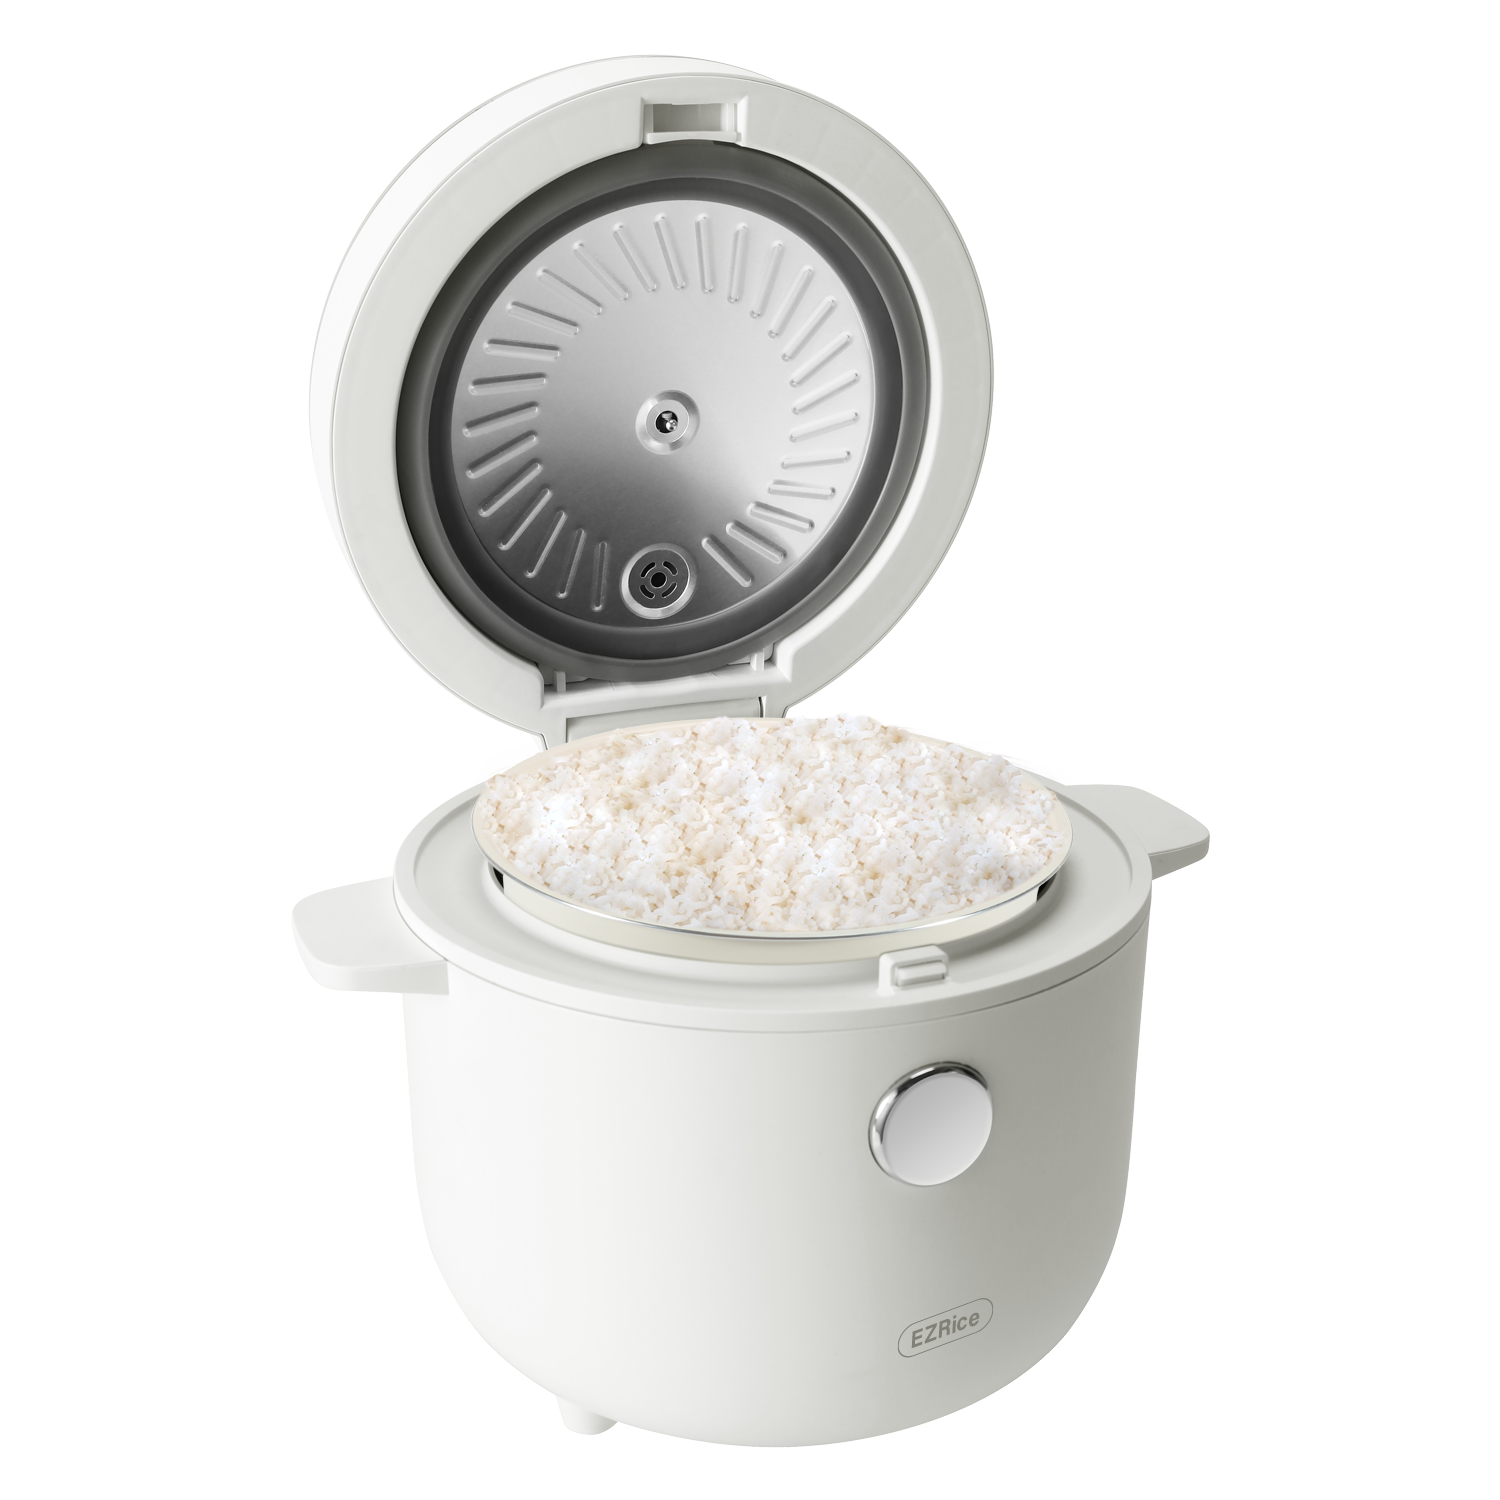 Electrova Wave Sensor Digital Low Sugar Rice Cooker EzRice Pro